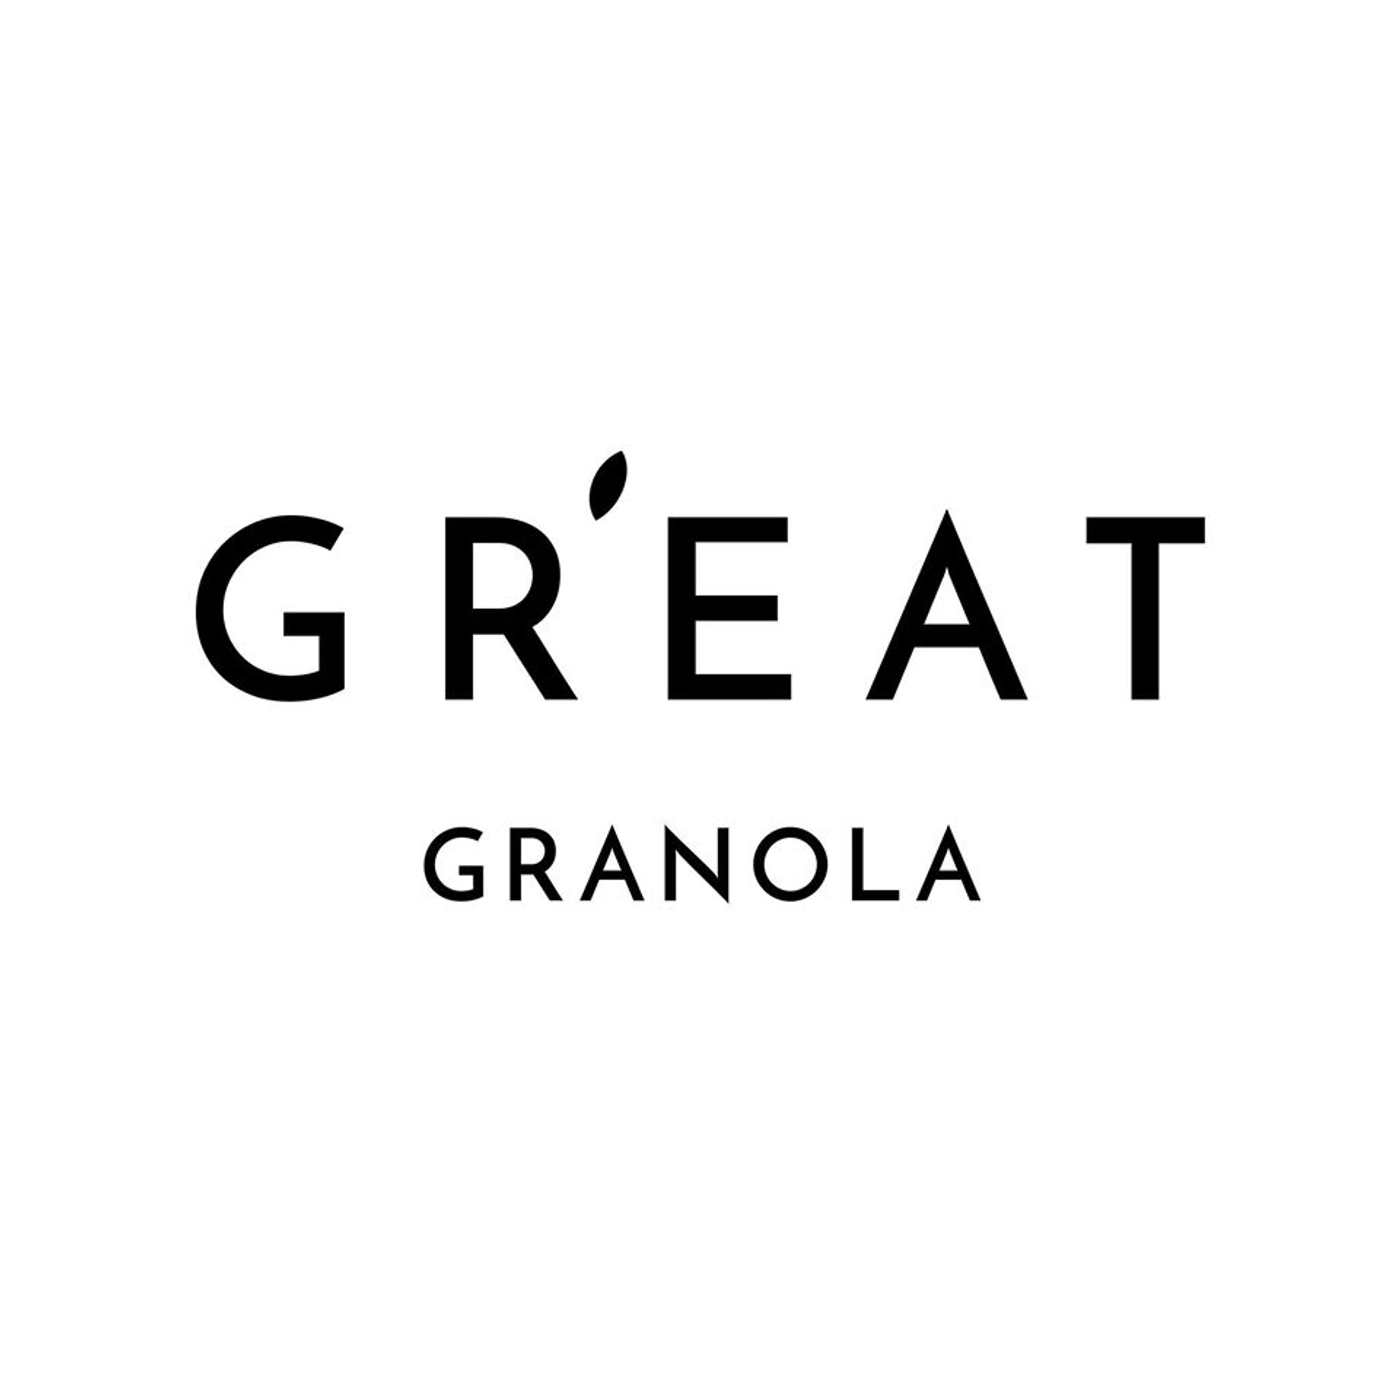 image de l'entreprise GR’EAT granola pour le poste de Vertegenwoordiger Stage FR en/of NL